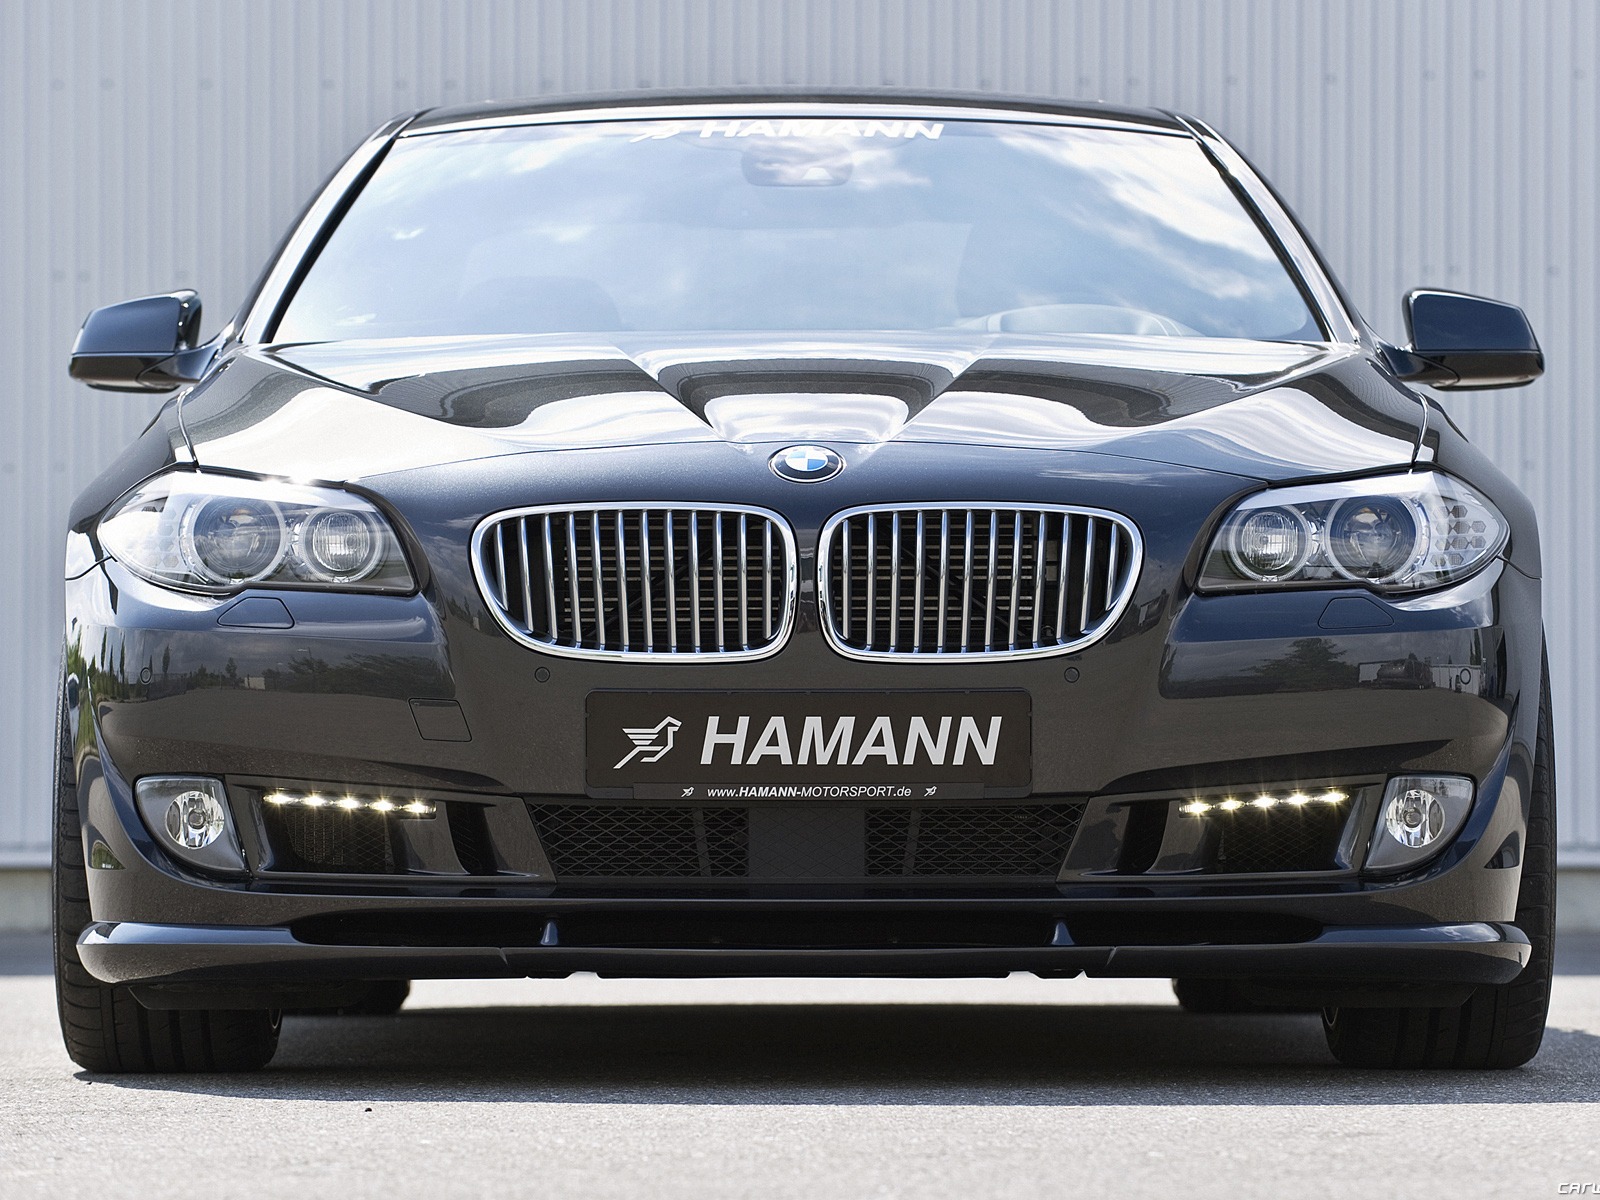 Hamann BMW 5-series F10 - 2010 寶馬 #13 - 1600x1200